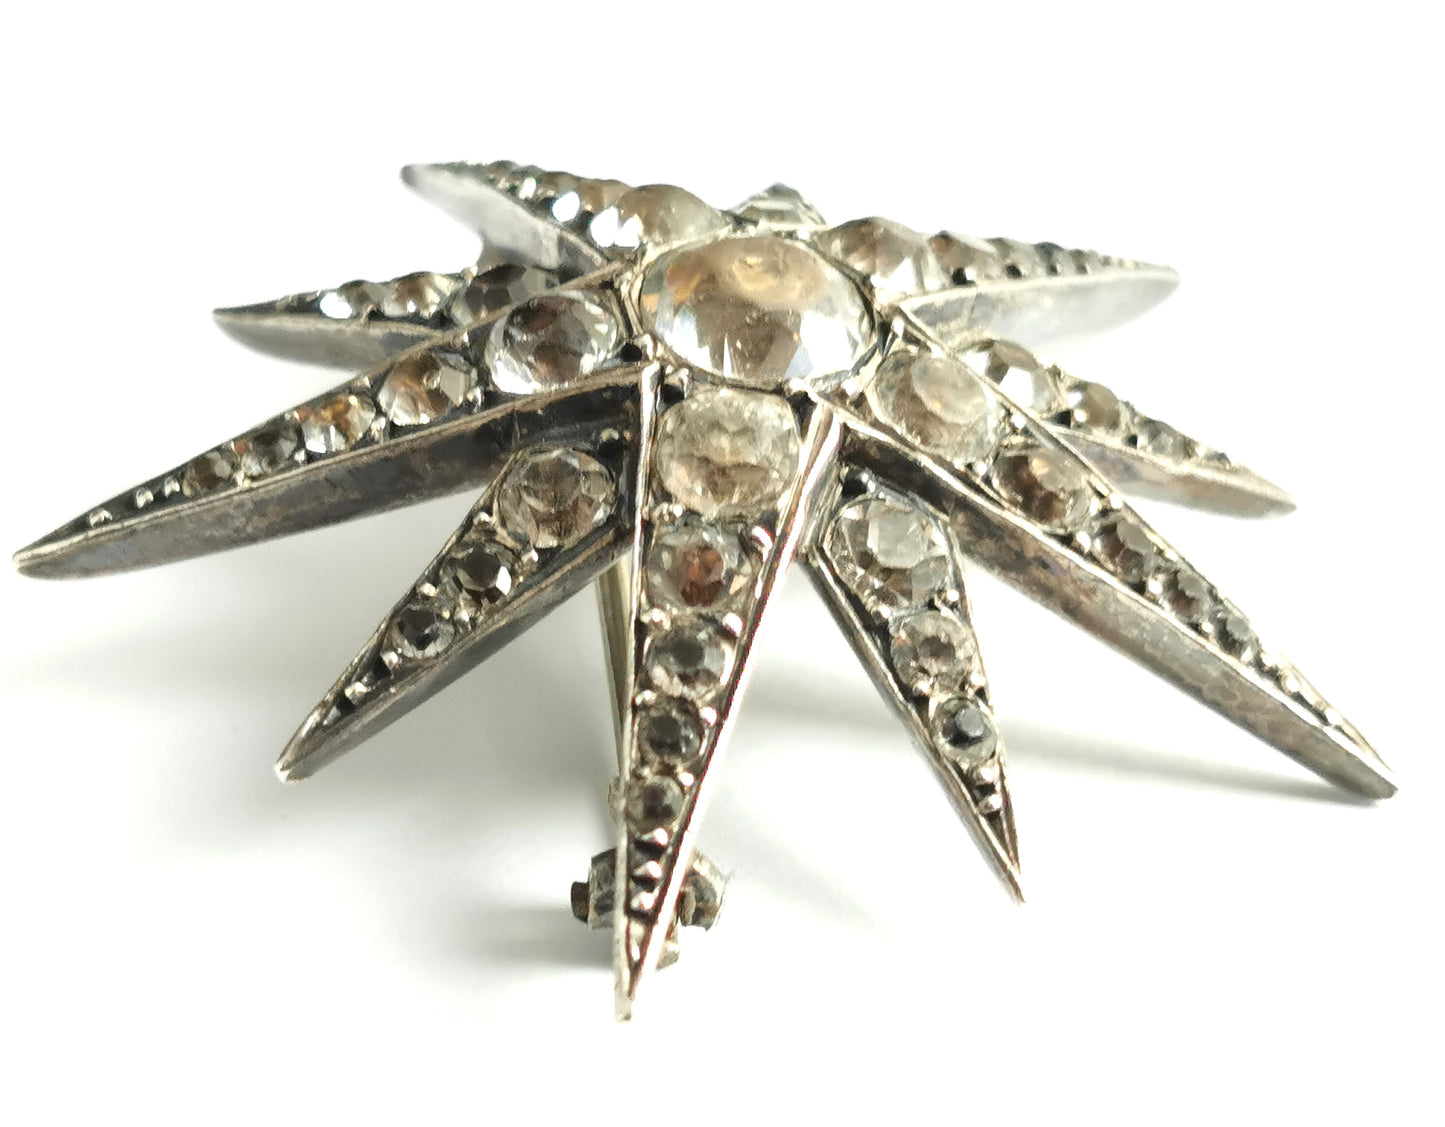 Antique paste Star brooch, sterling silver, Victorian